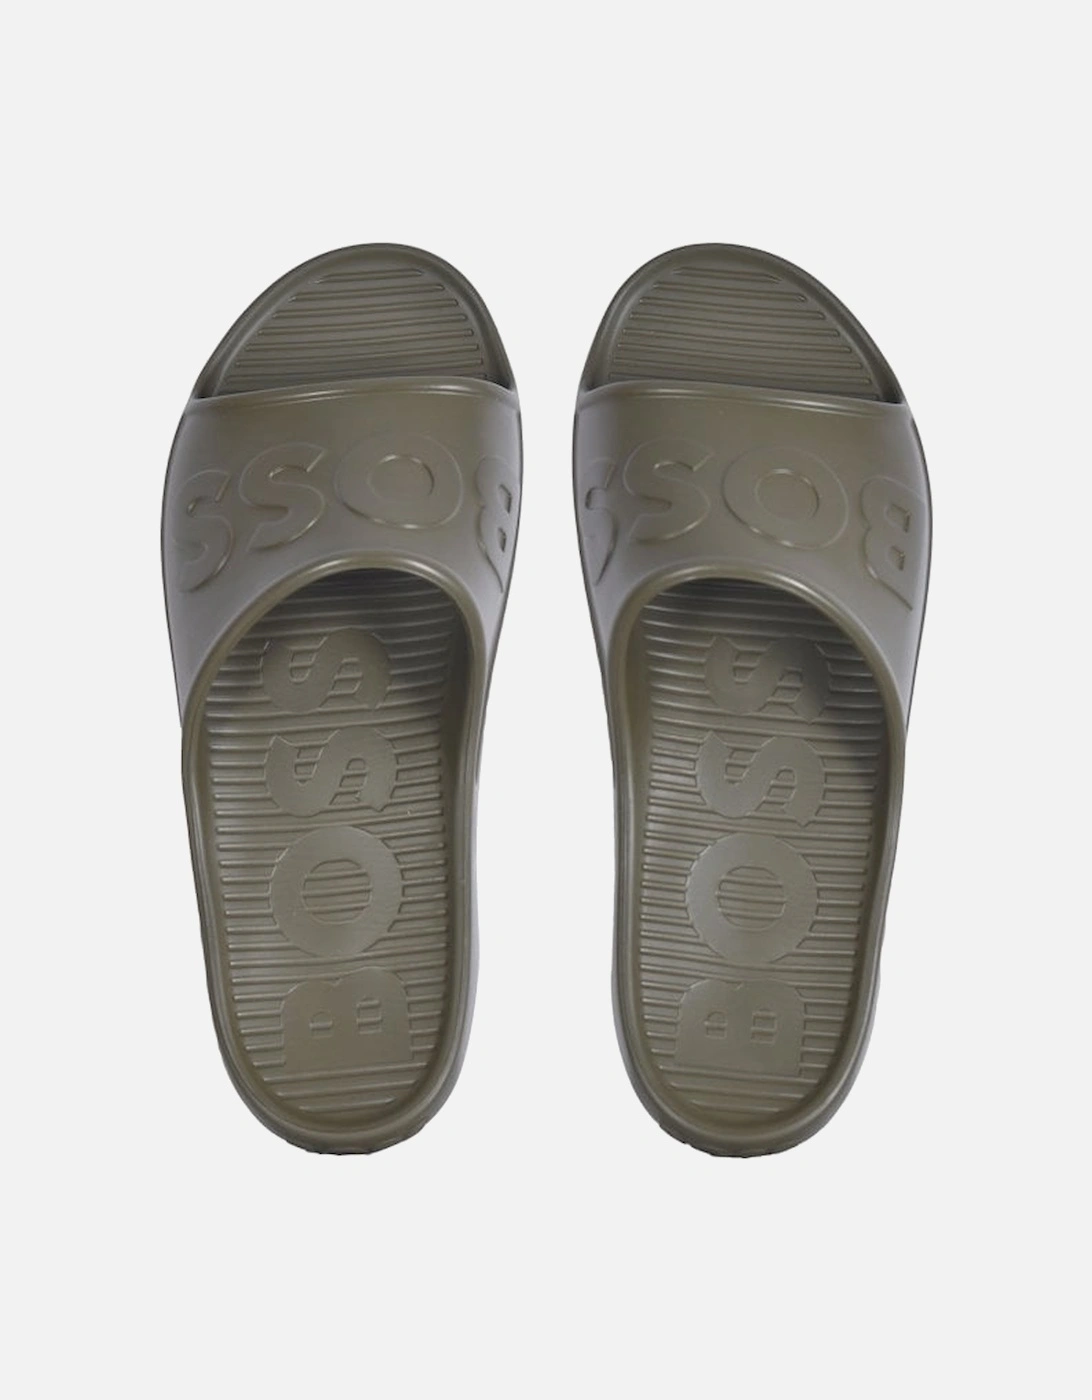 Darian Logo Slider Sandals, Khaki